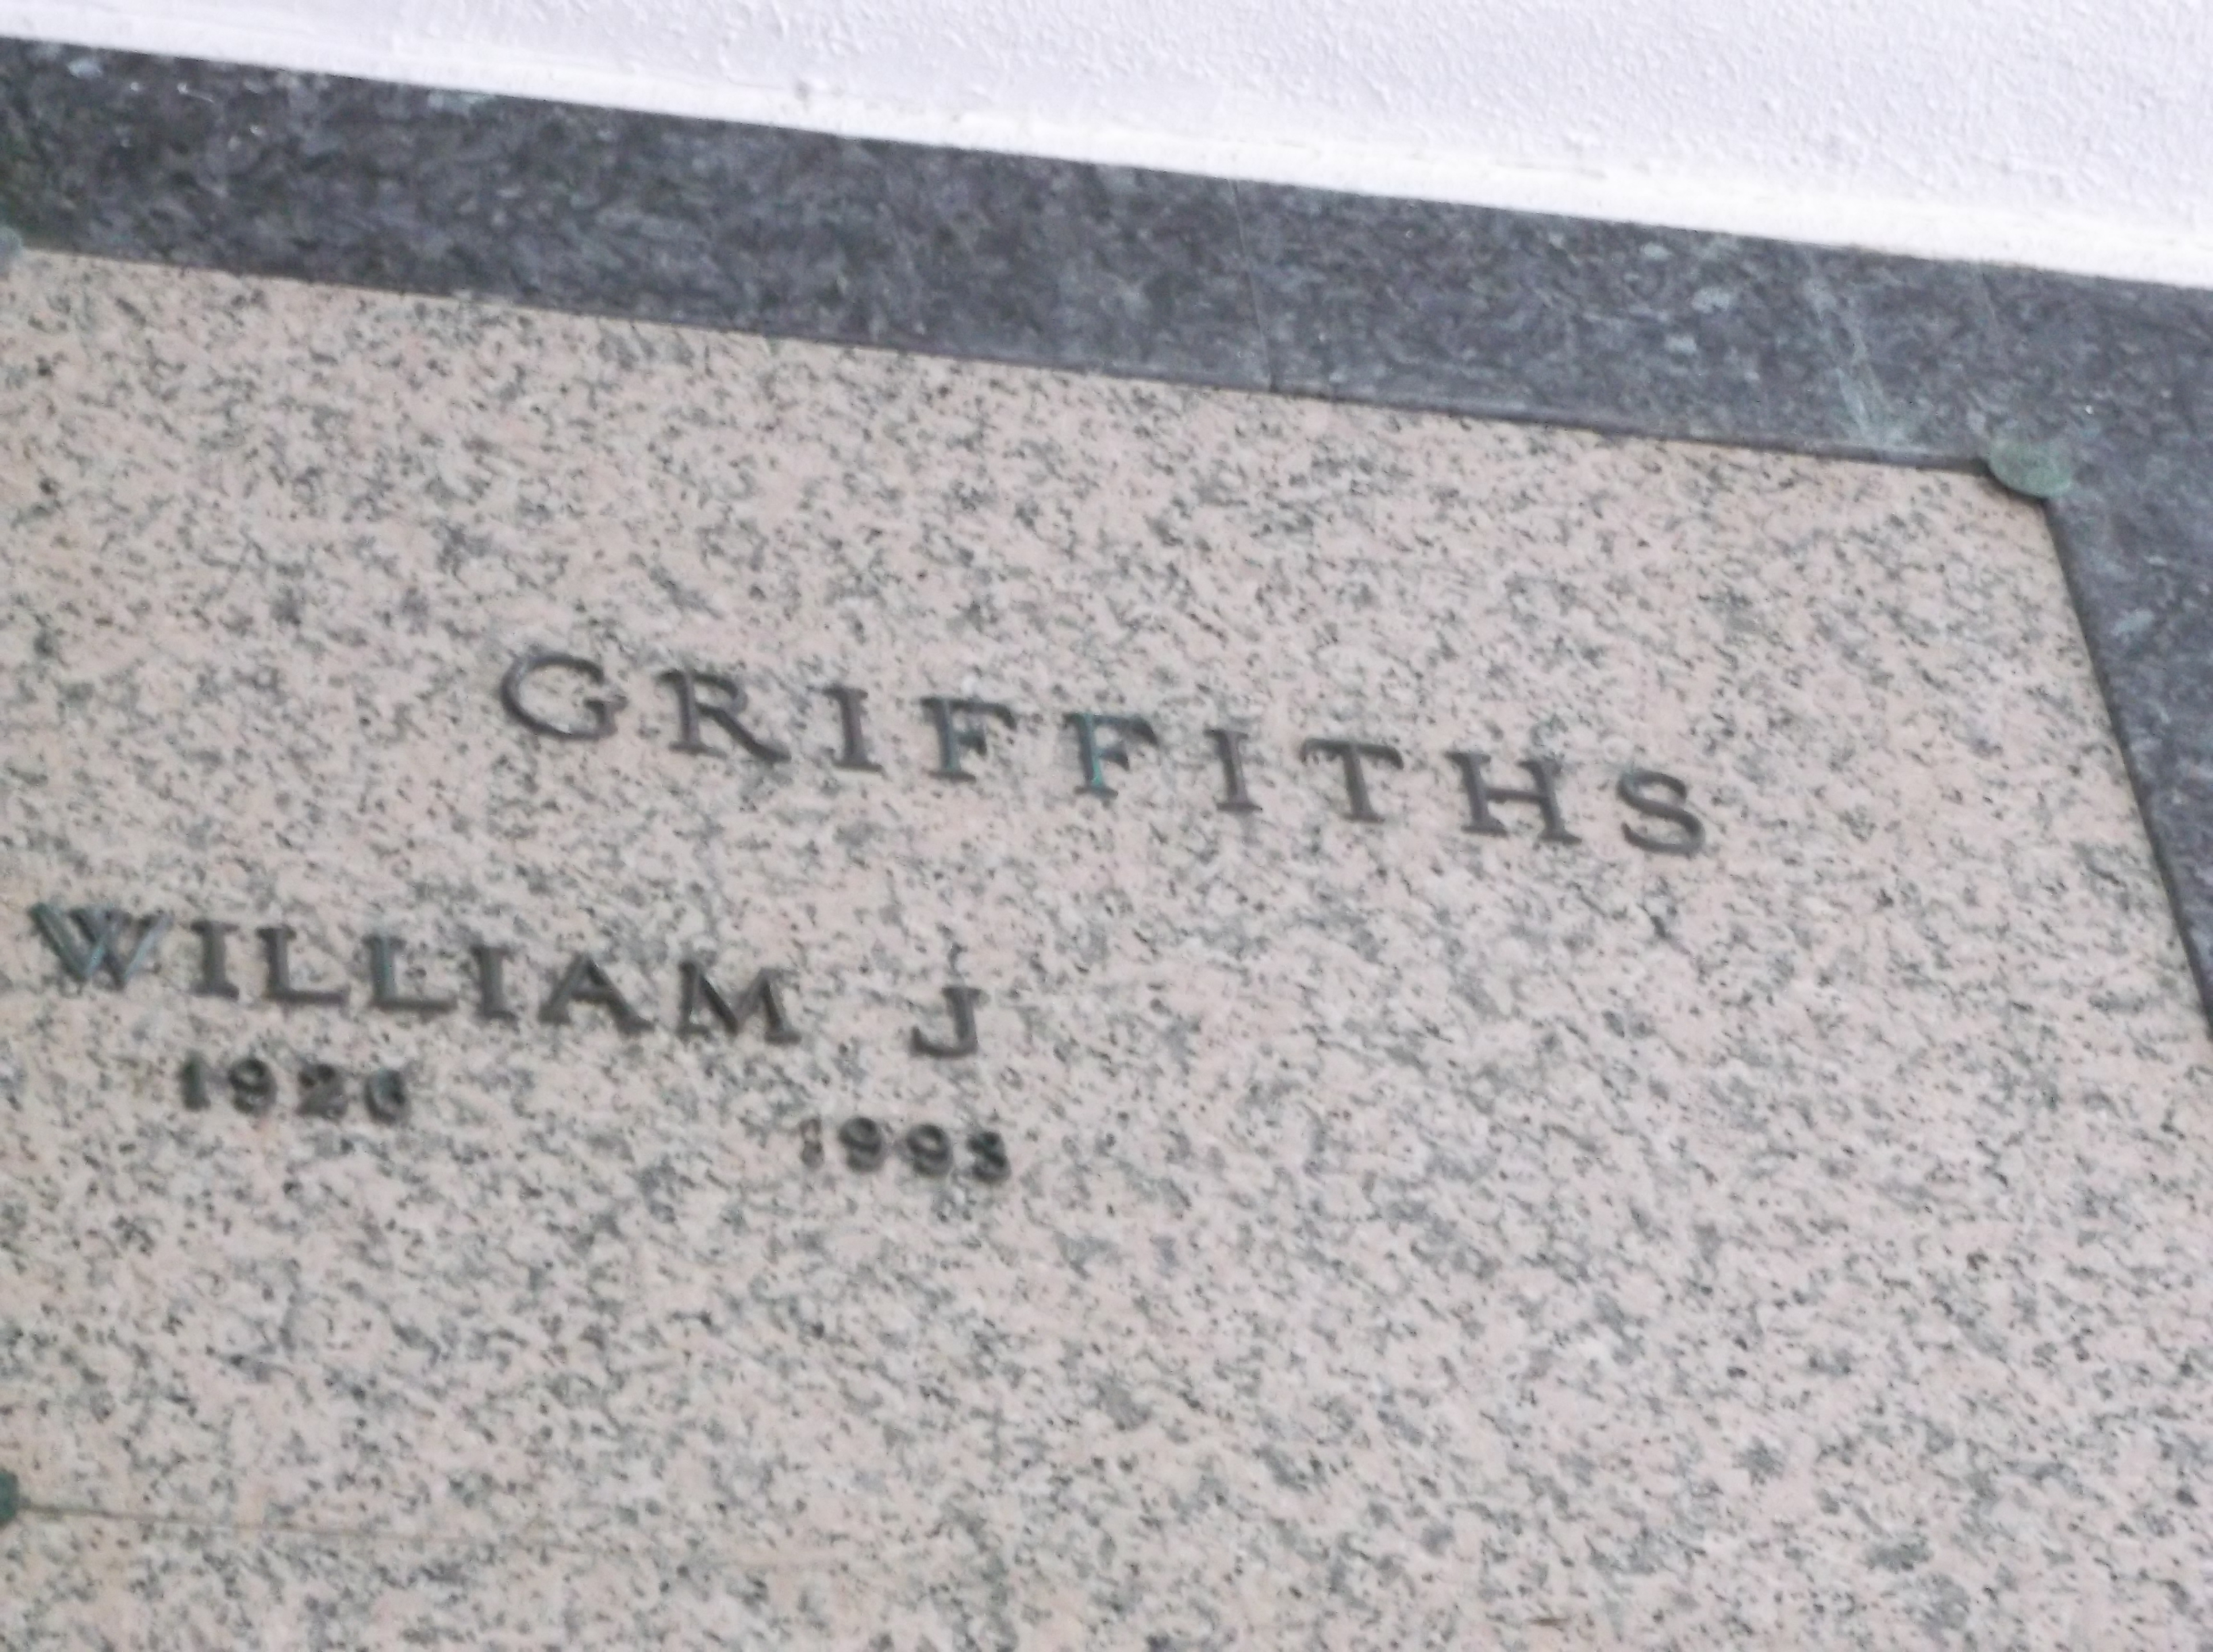 William J Griffiths